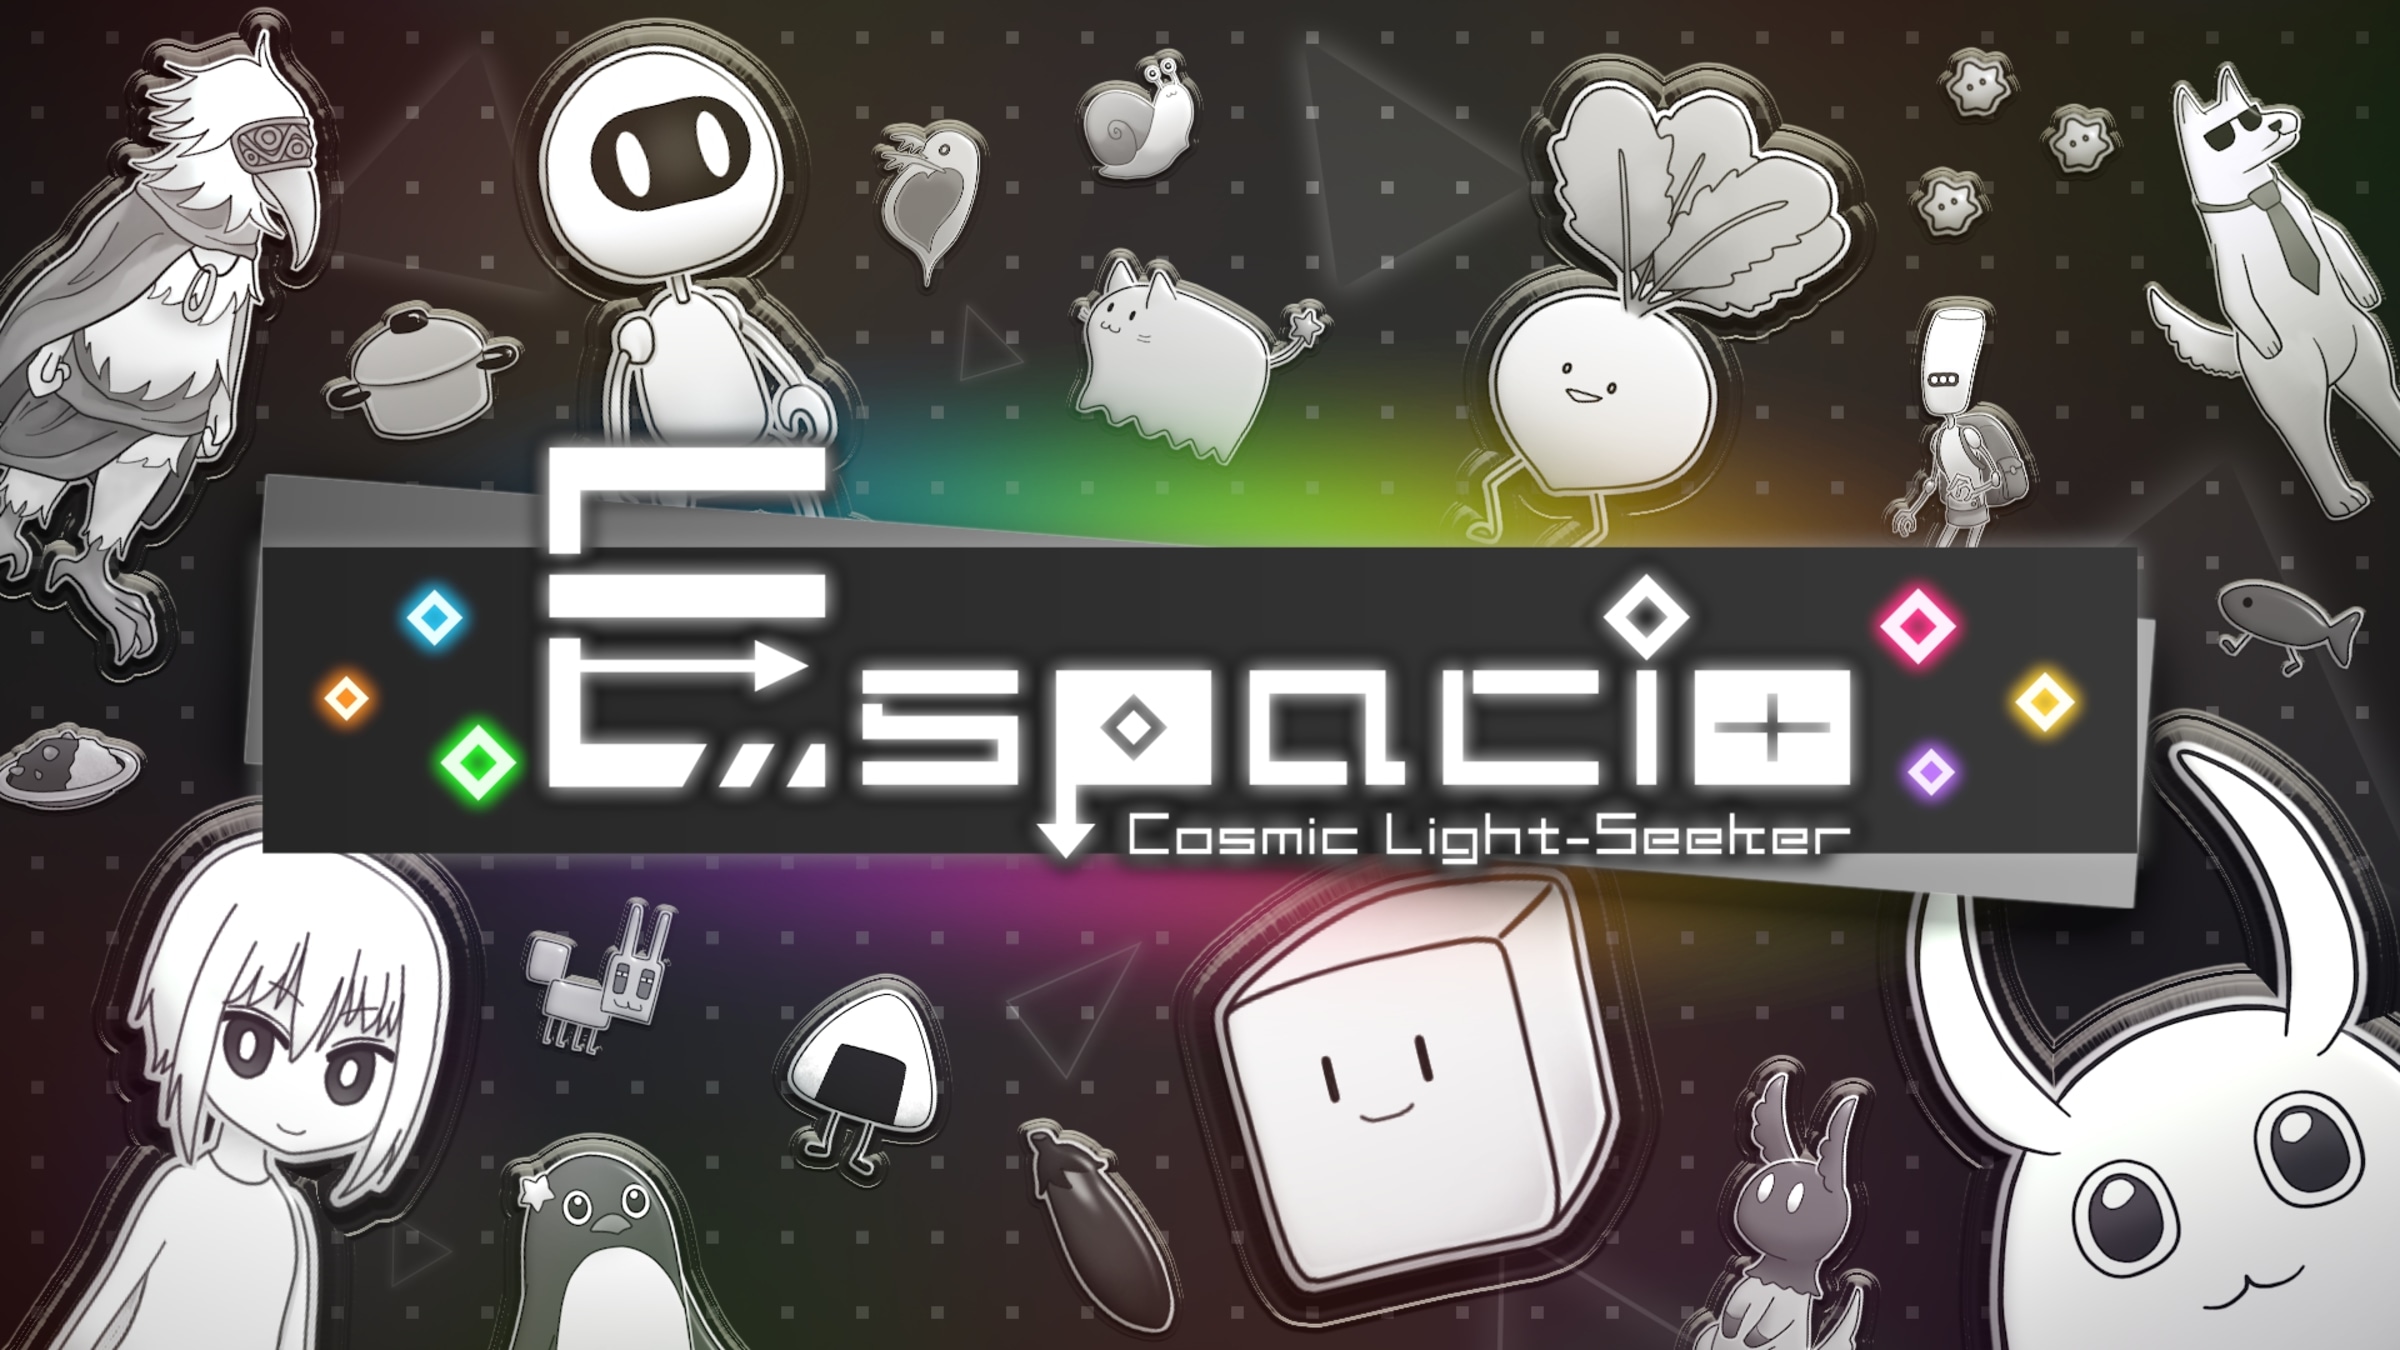 Espacio Cosmic Light-Seeker for Nintendo Switch - Nintendo Official Site